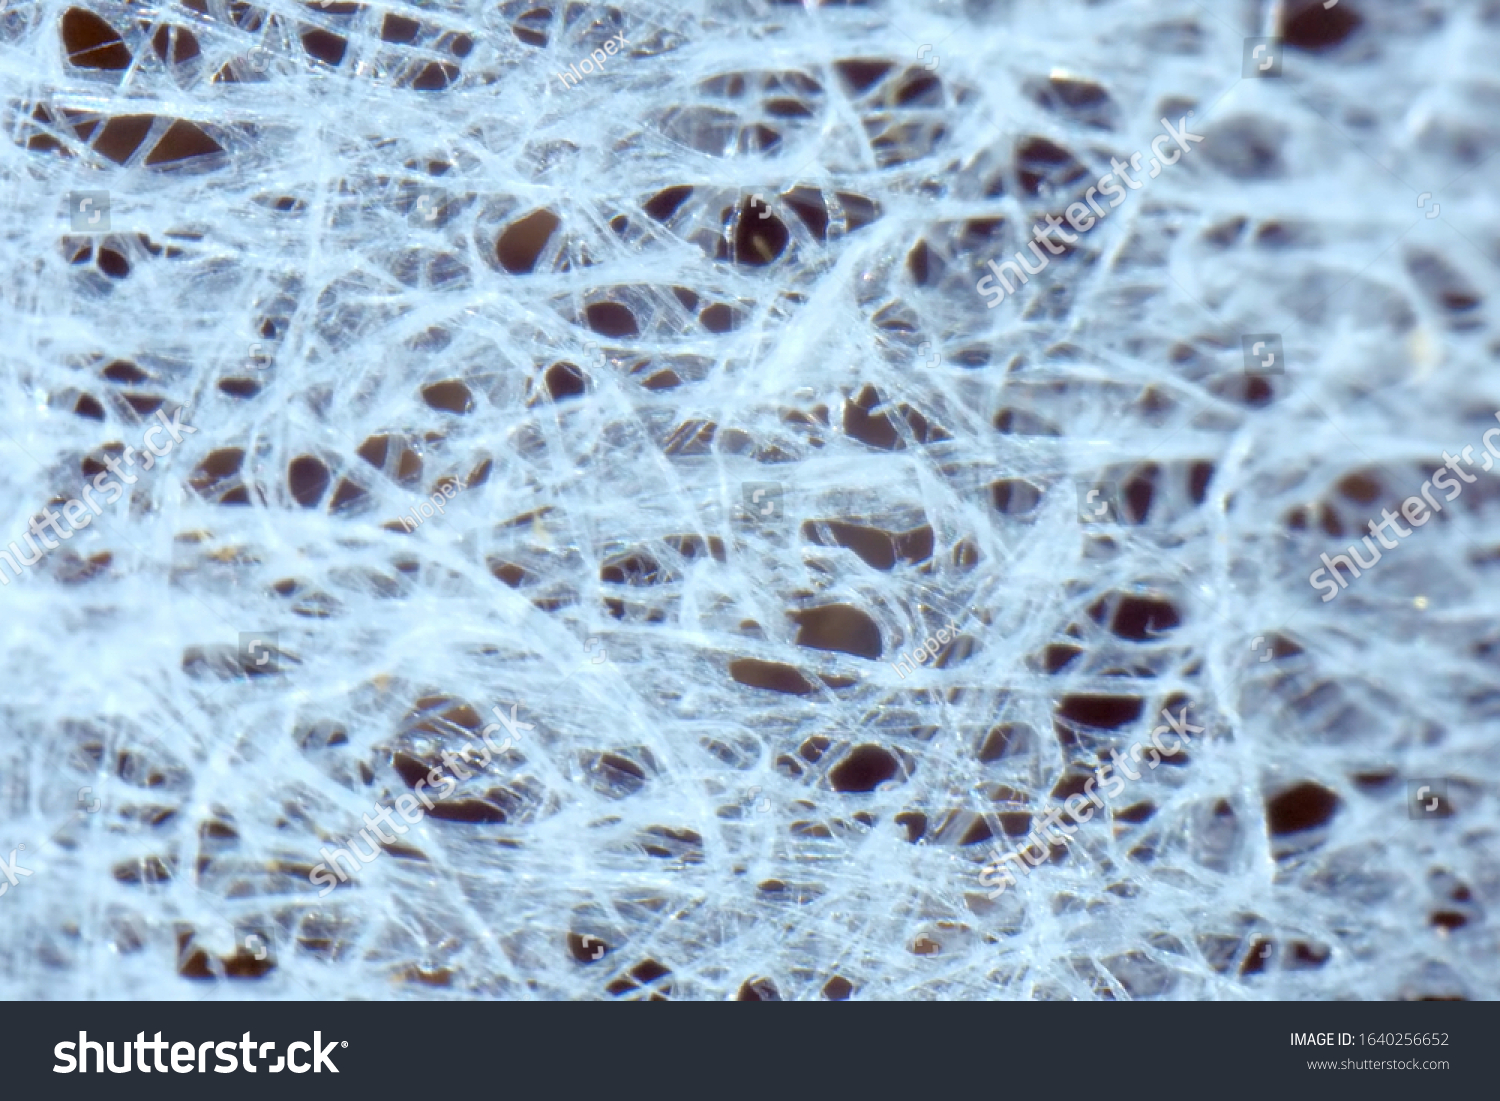 Background texture made of transparent organic. Threads of organic matter. #1640256652